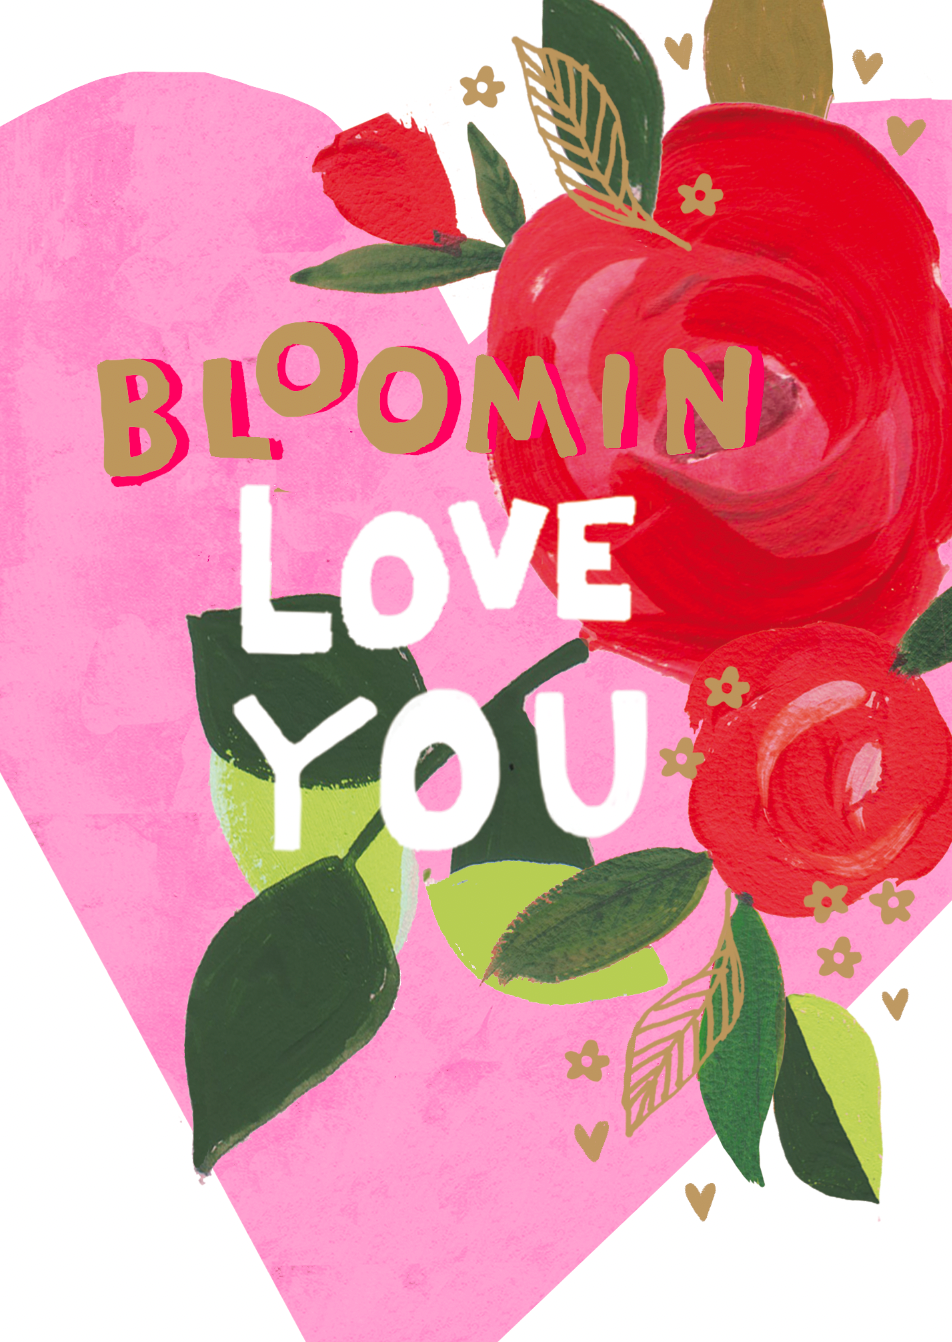 Bloomin' Love Valentine's Day Card